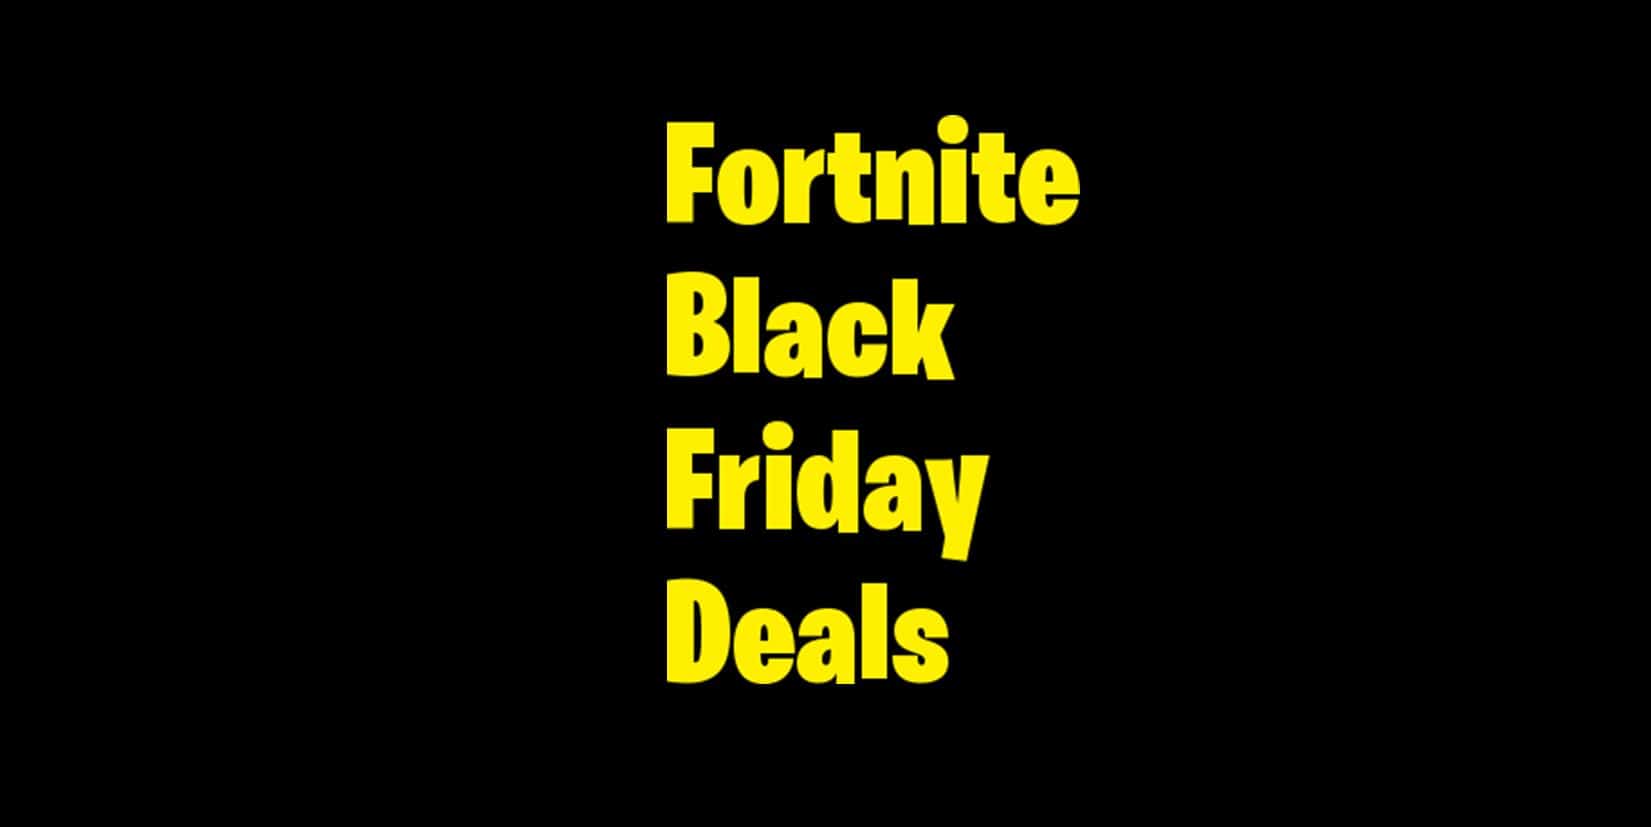 Fortnite Black Friday Deals